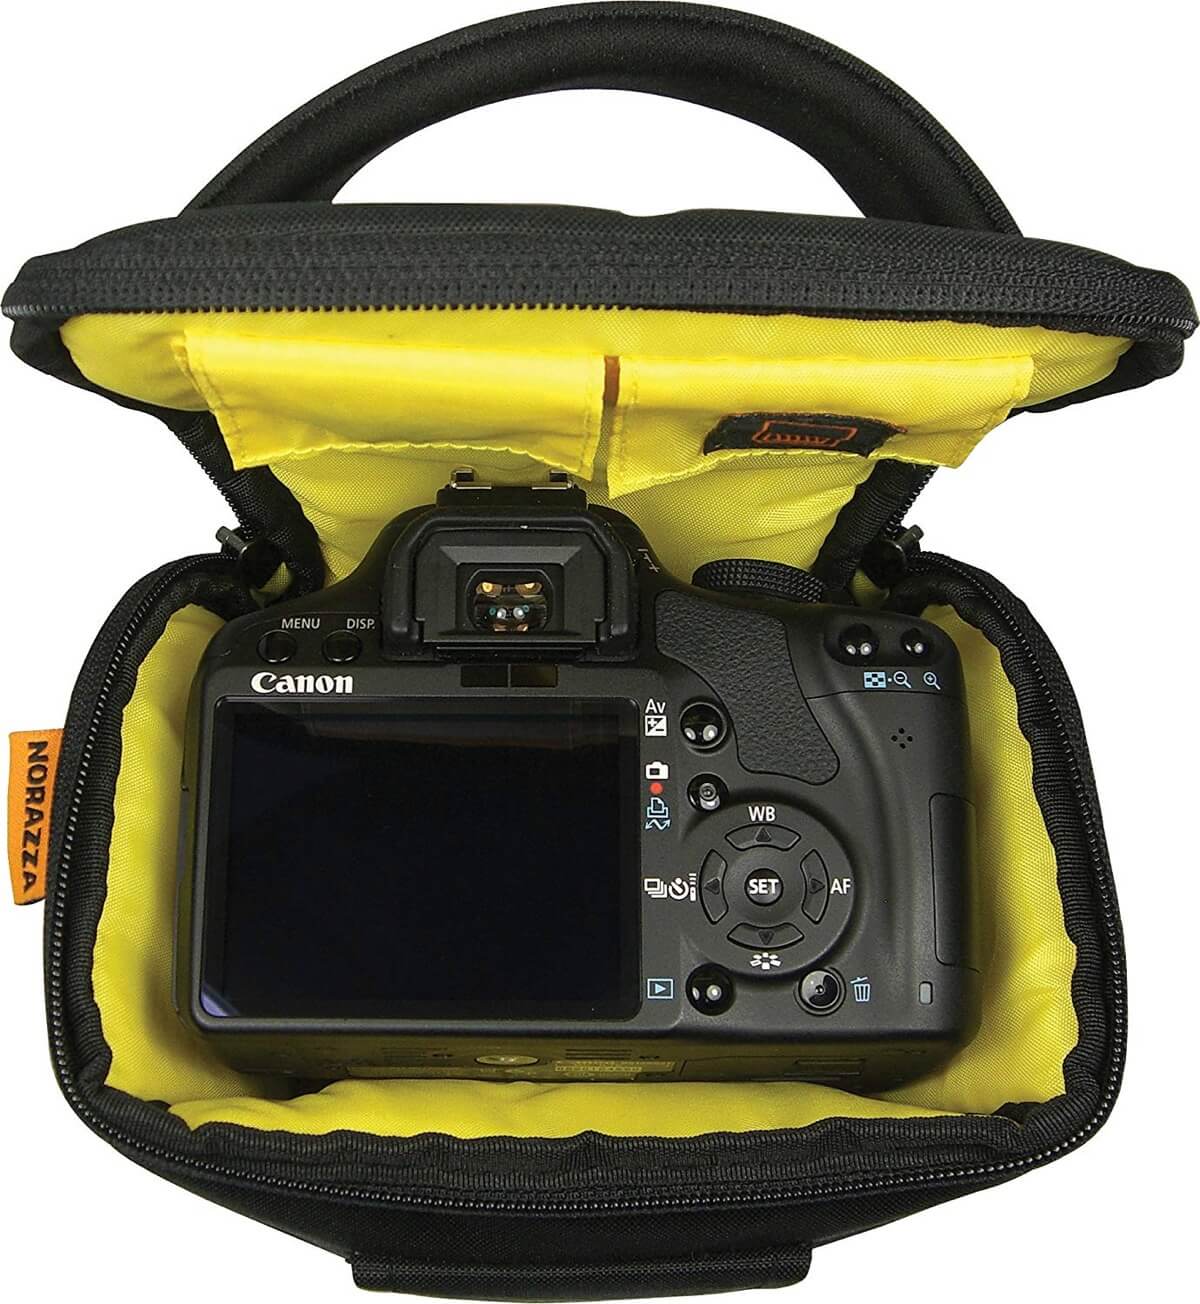 small dslr camera backpack